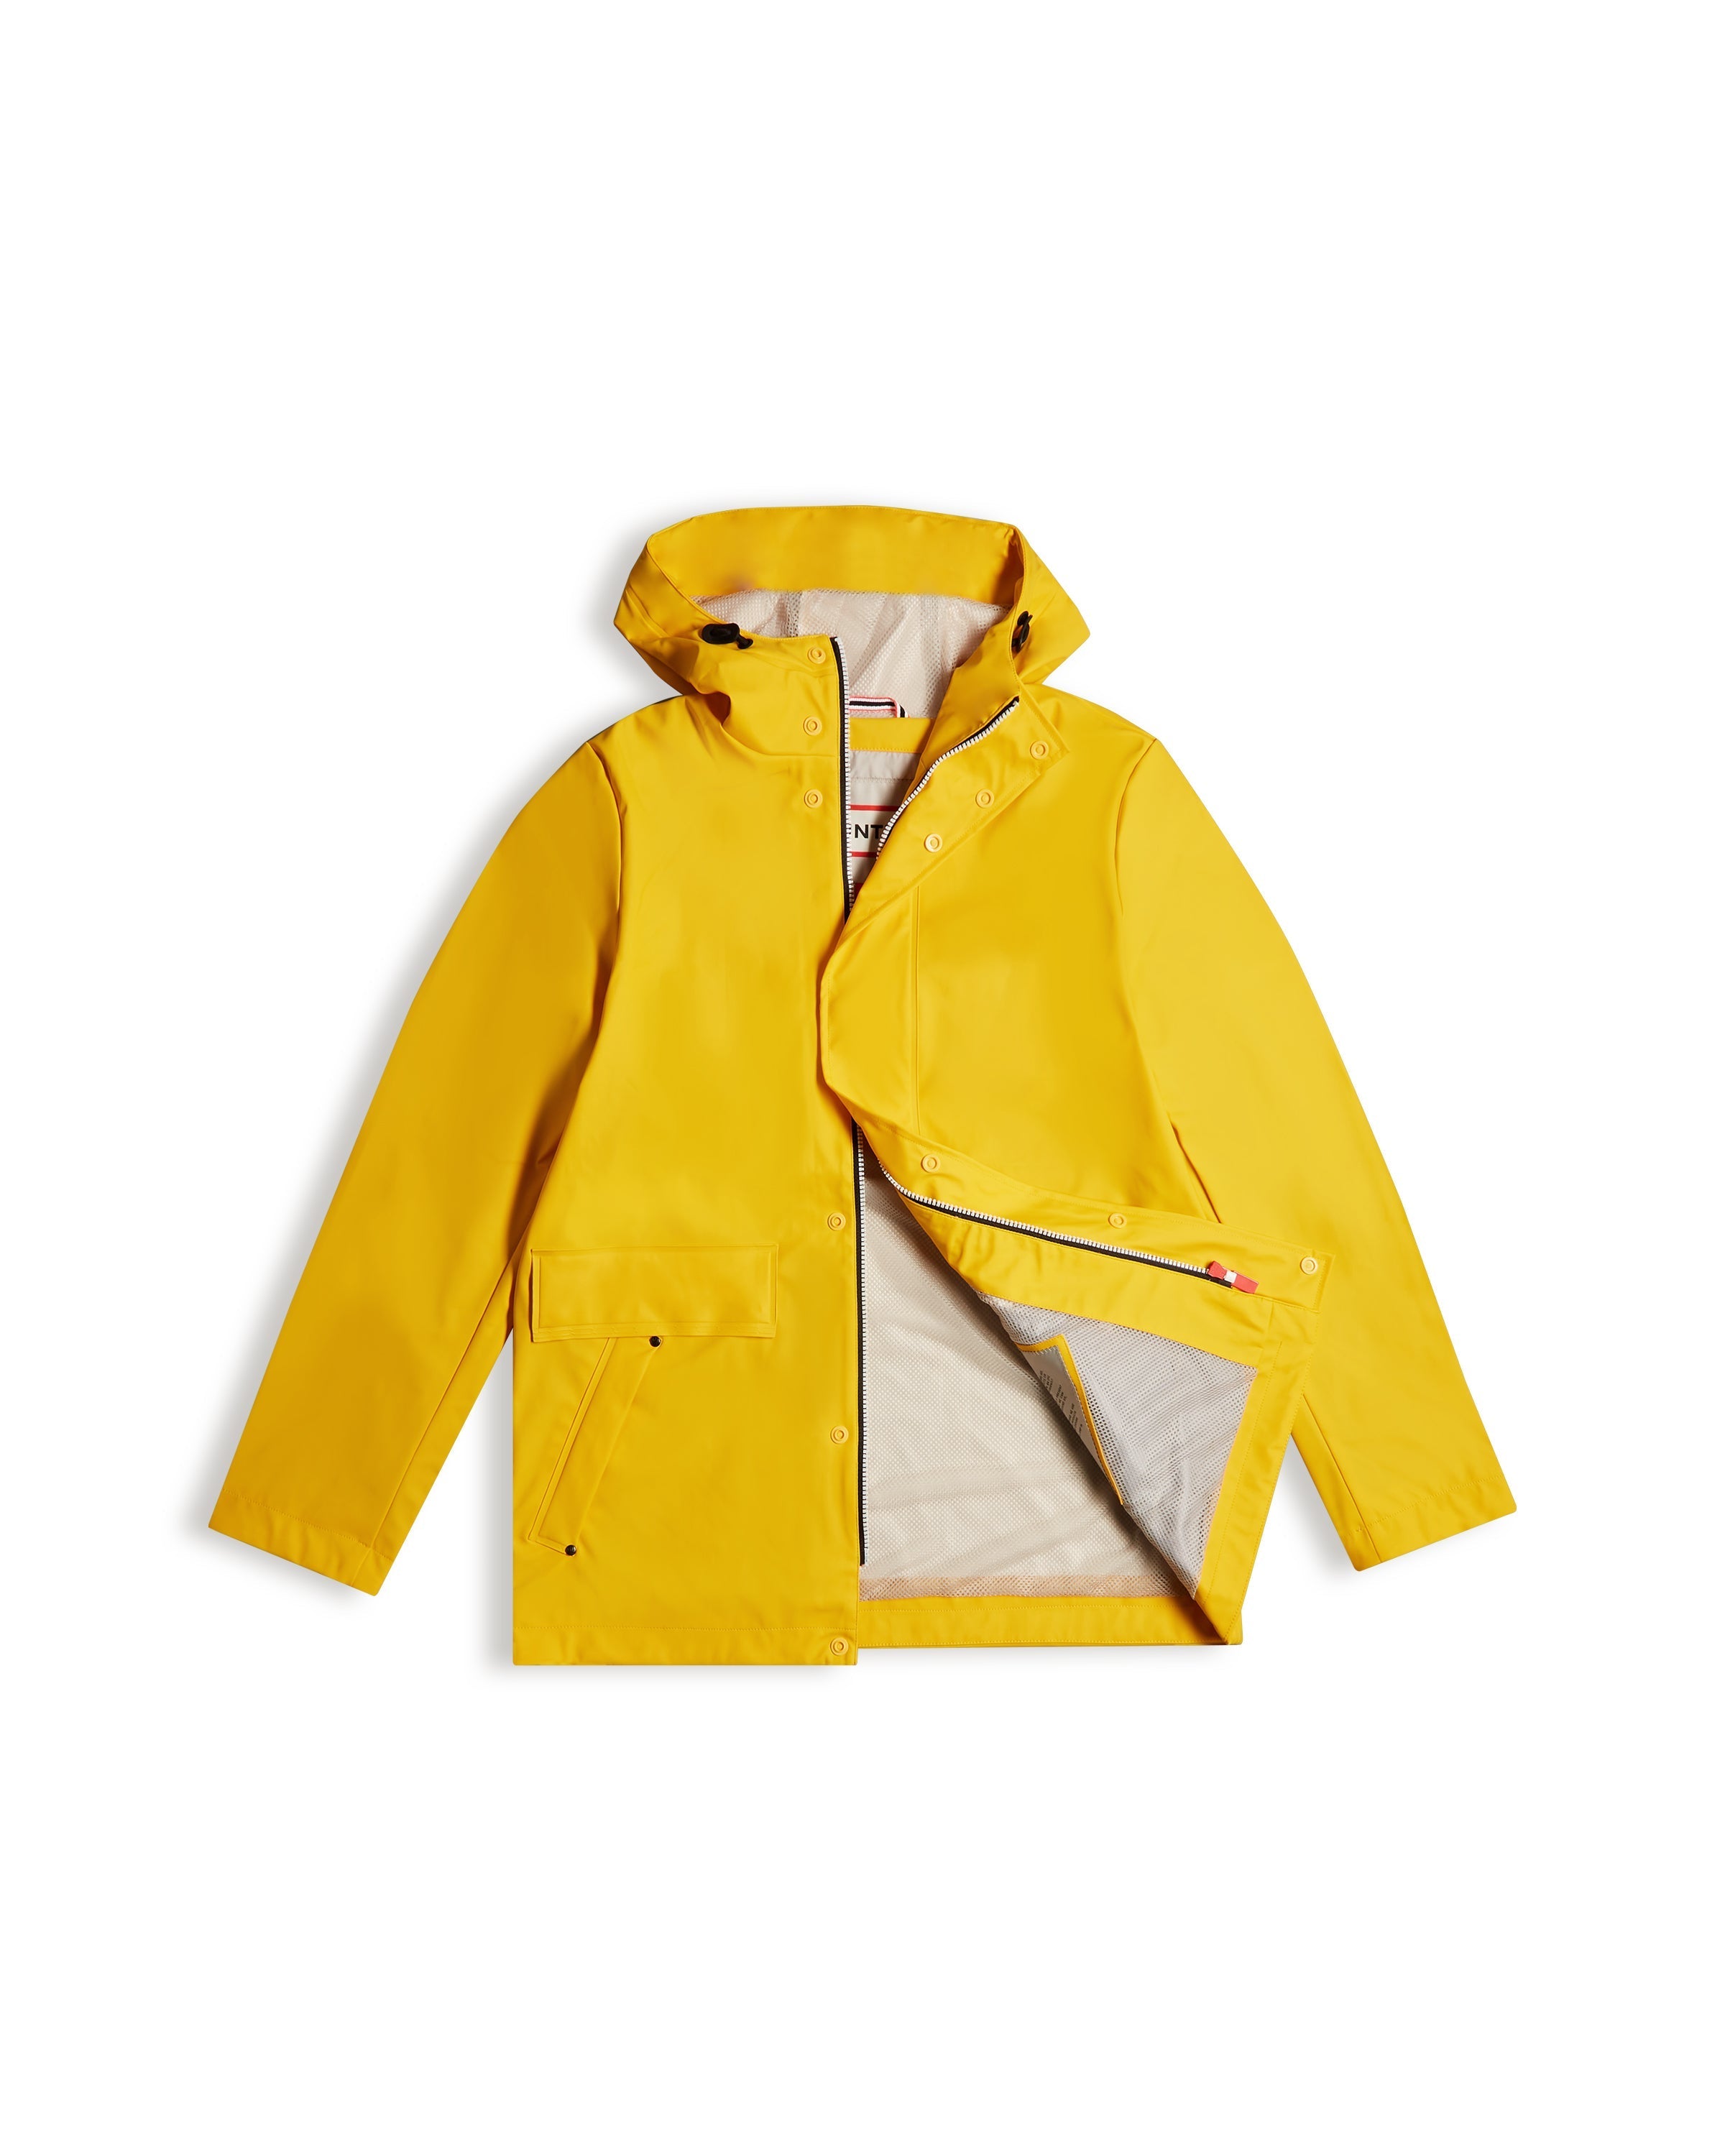 Men's Lightweight Waterproof Rain Jacket - Yellow